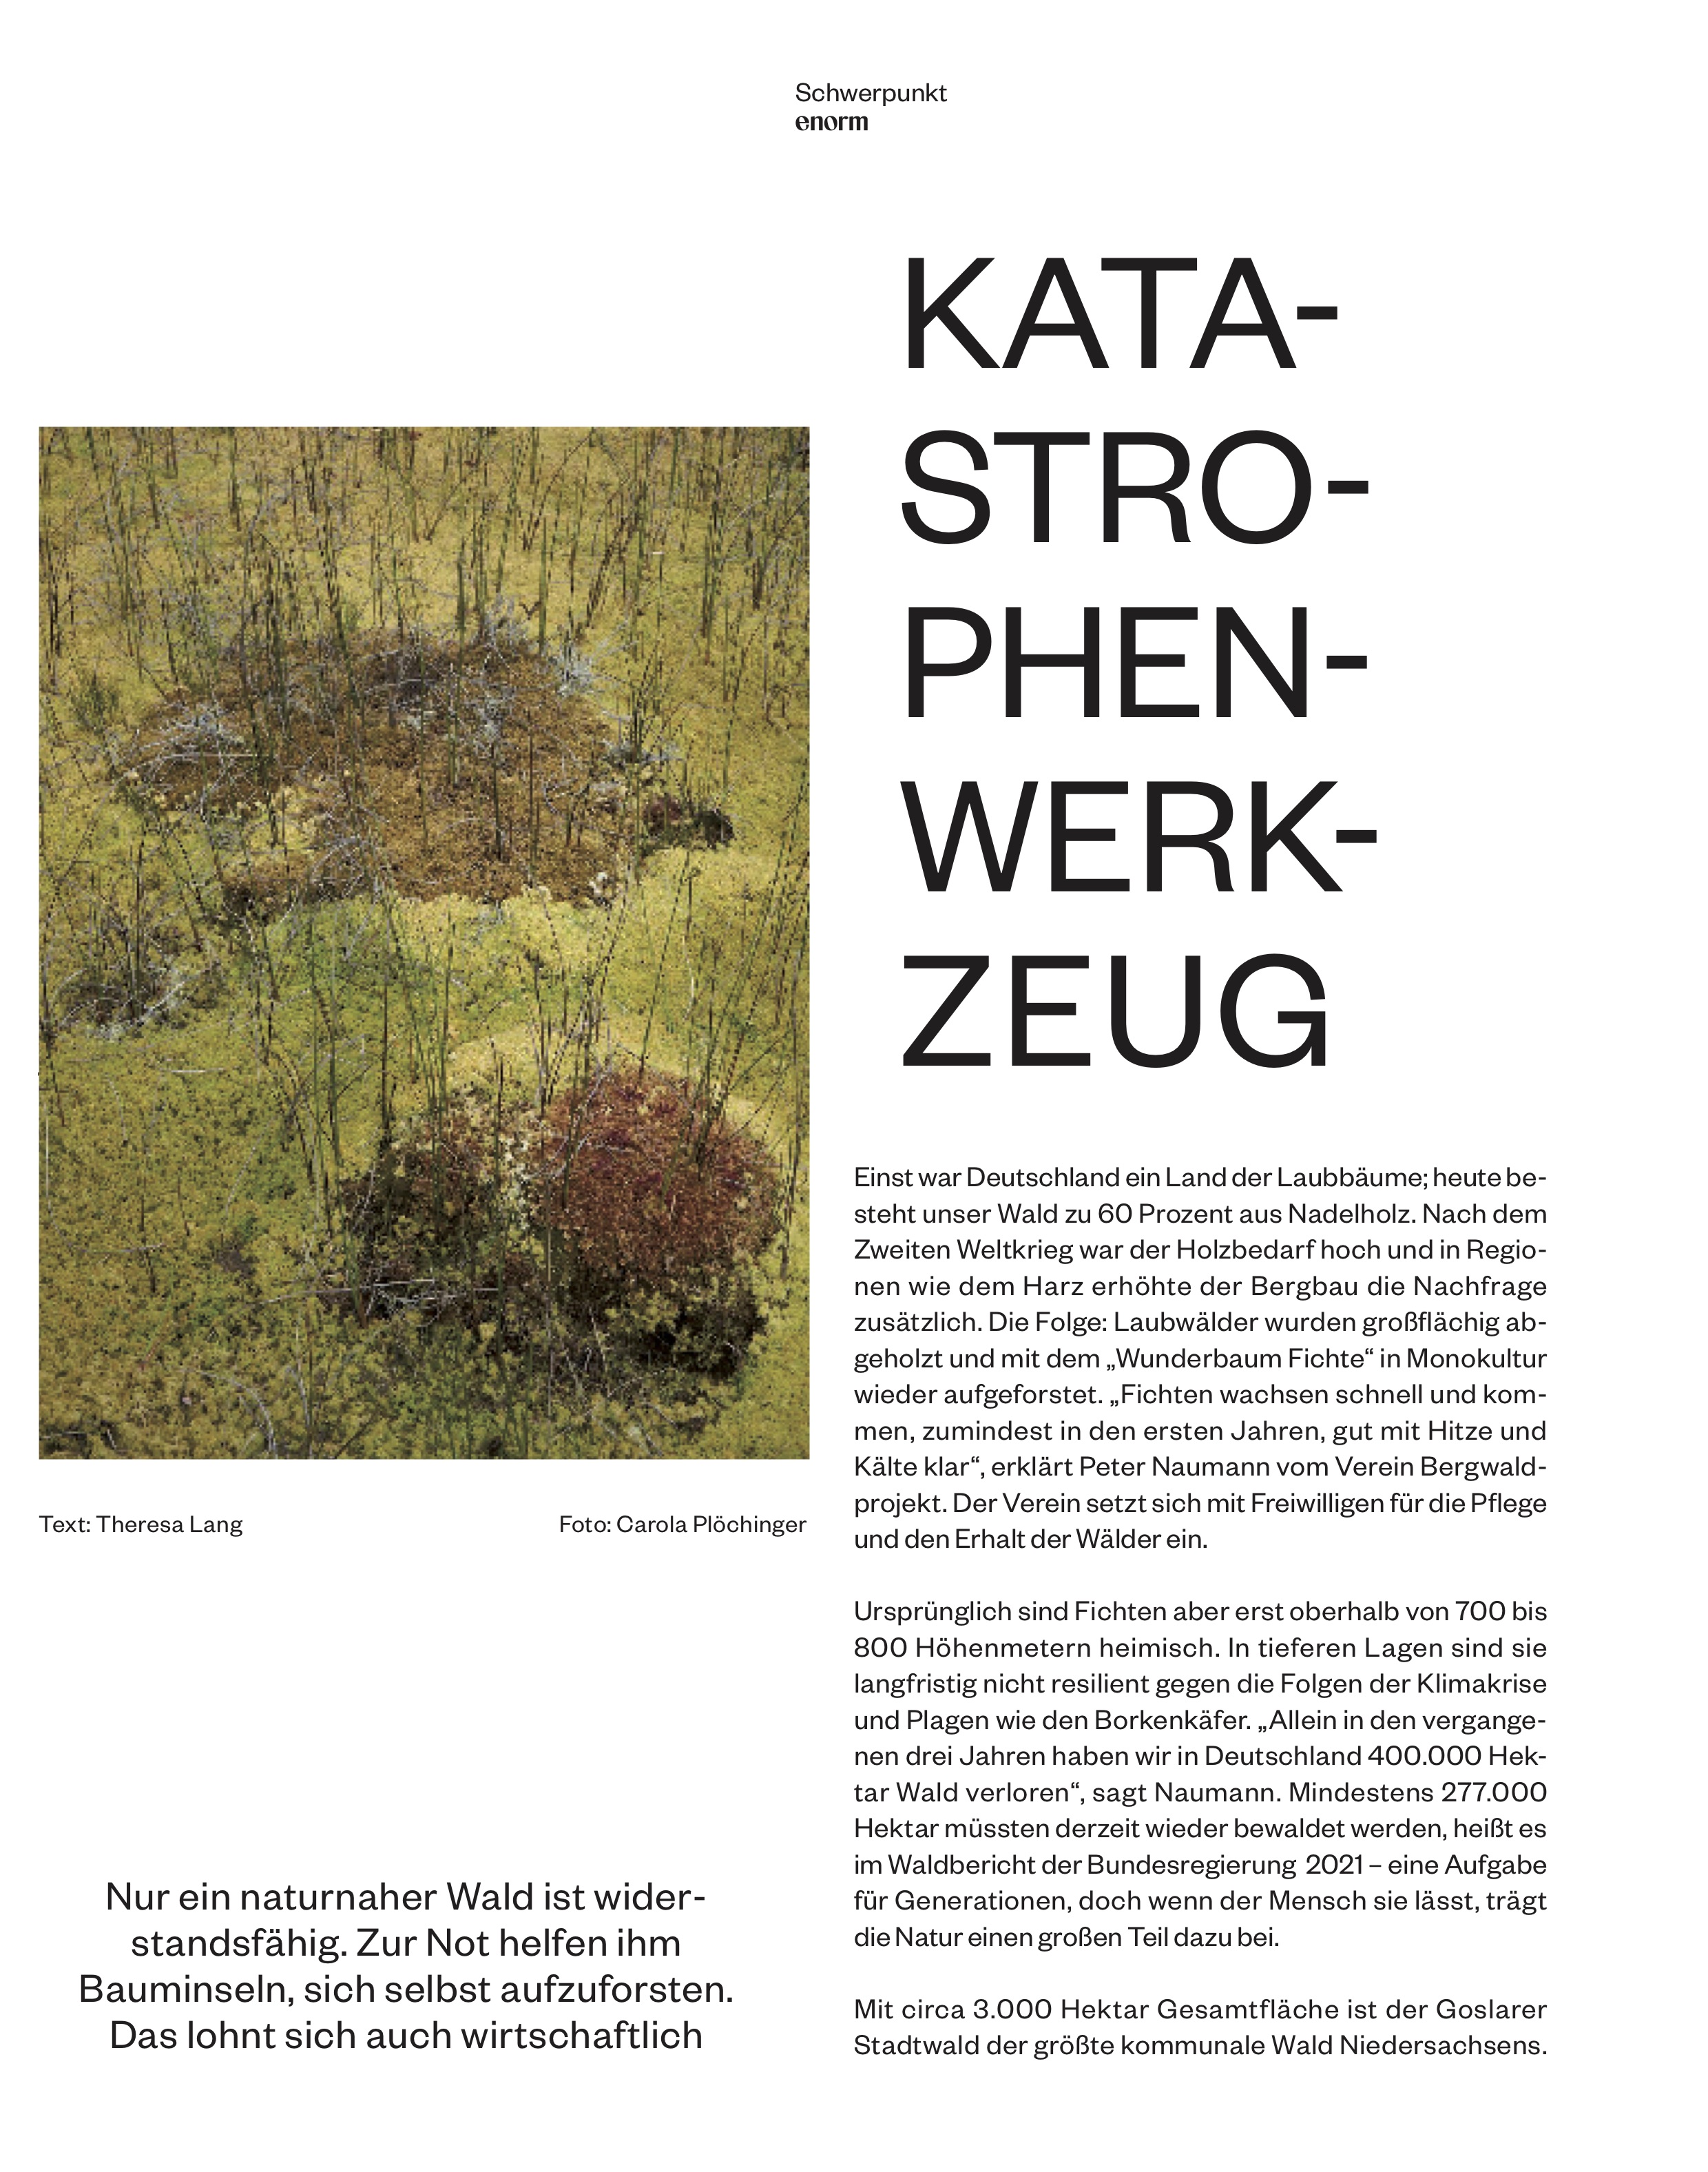 Enorm Magazin Tearsheet Bauminseln with image by Carola Plöchinger